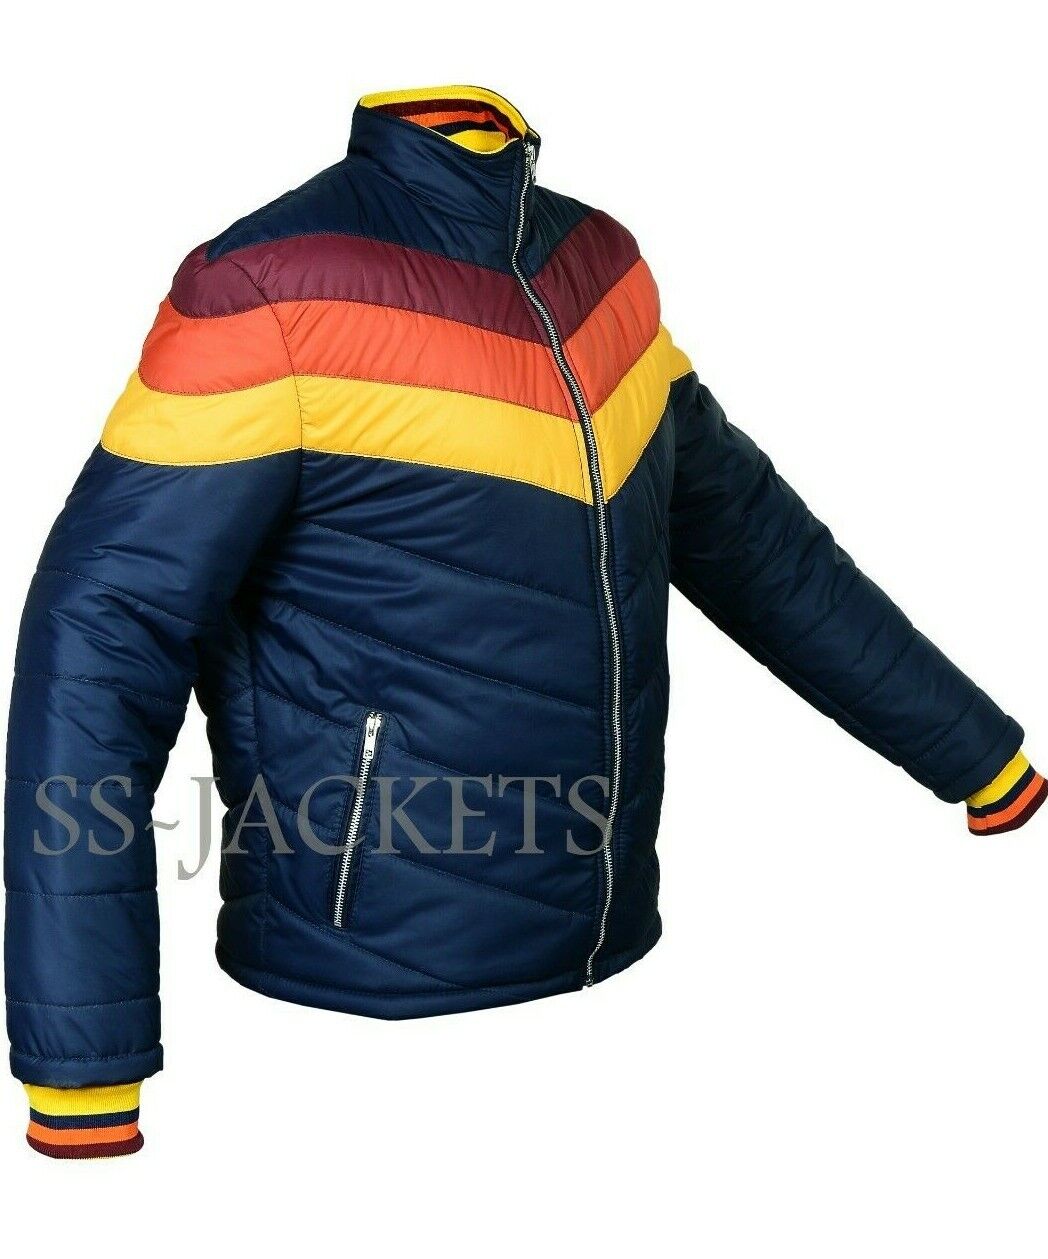 Bomber Jacket Rainbow Navy jacket Women's rainbow jacket ski vintage 70s